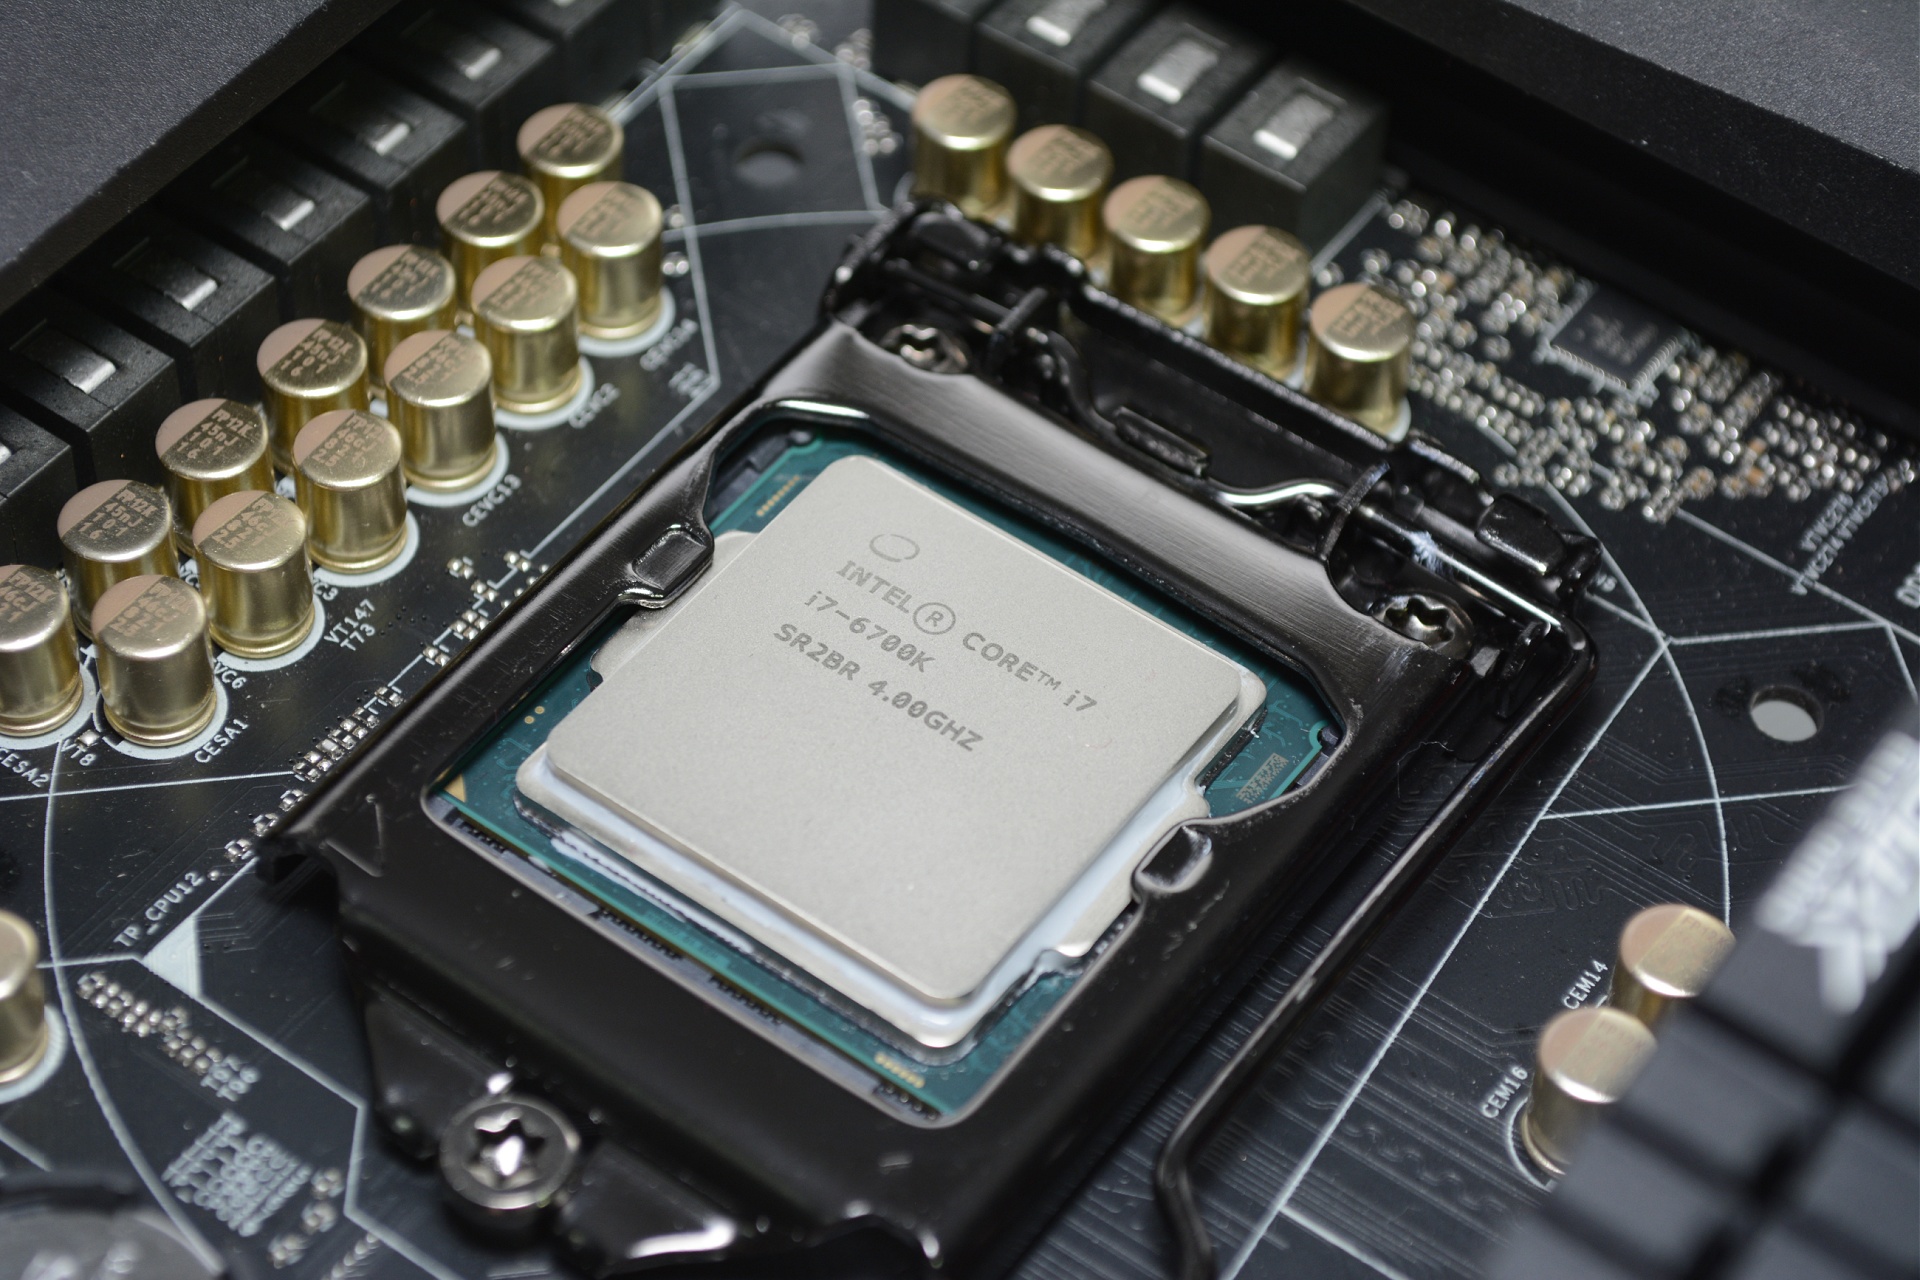 Intel Core i7-6700K Skylake CPU Review - TechSpot